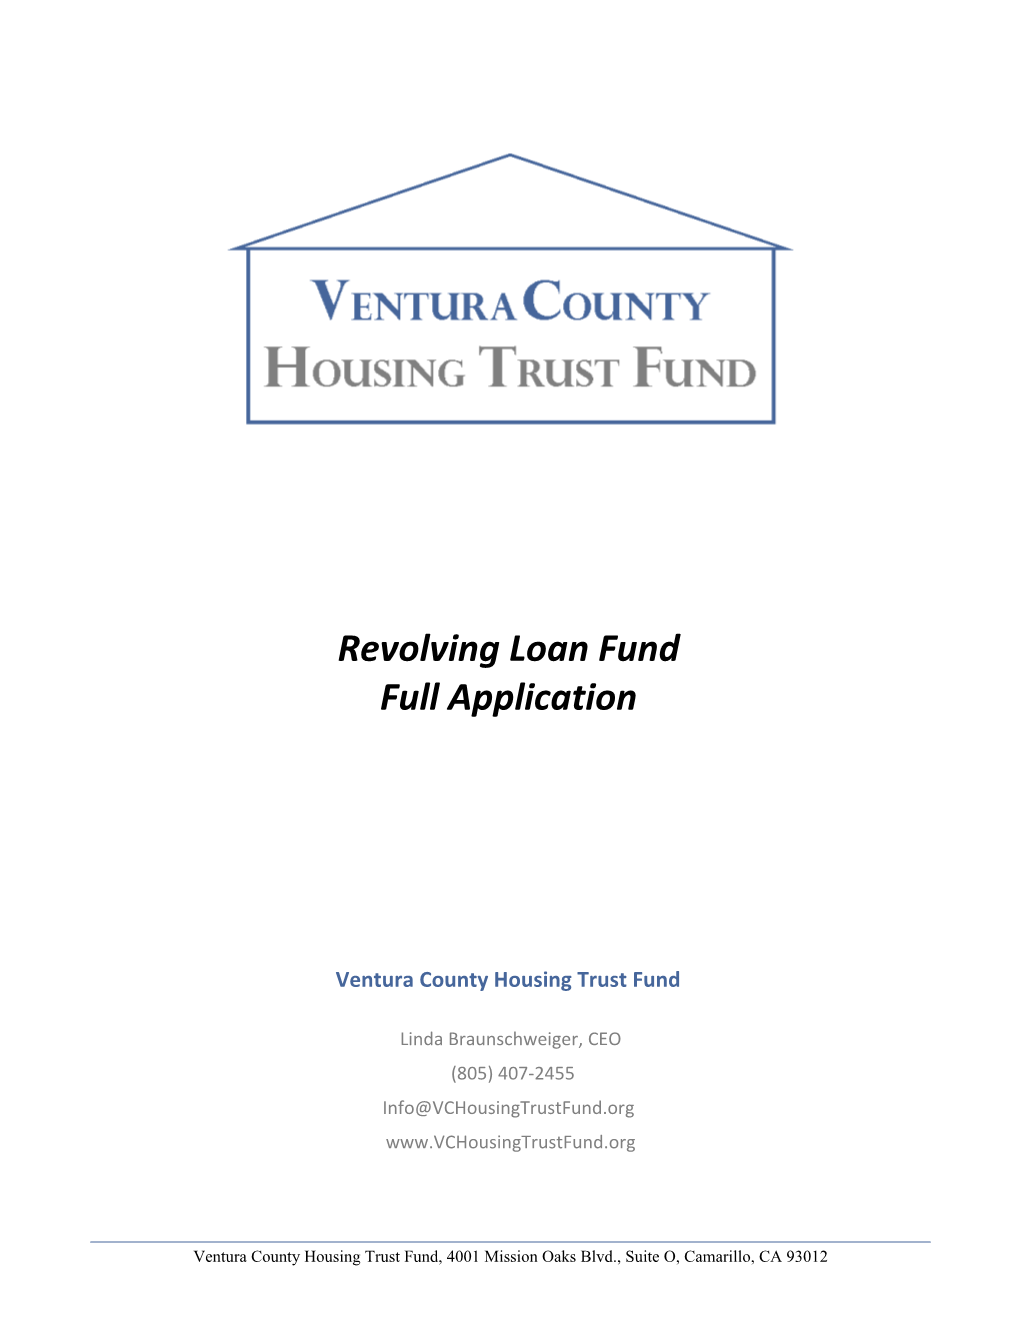 Housing Trust Fund of Santa Barbara County